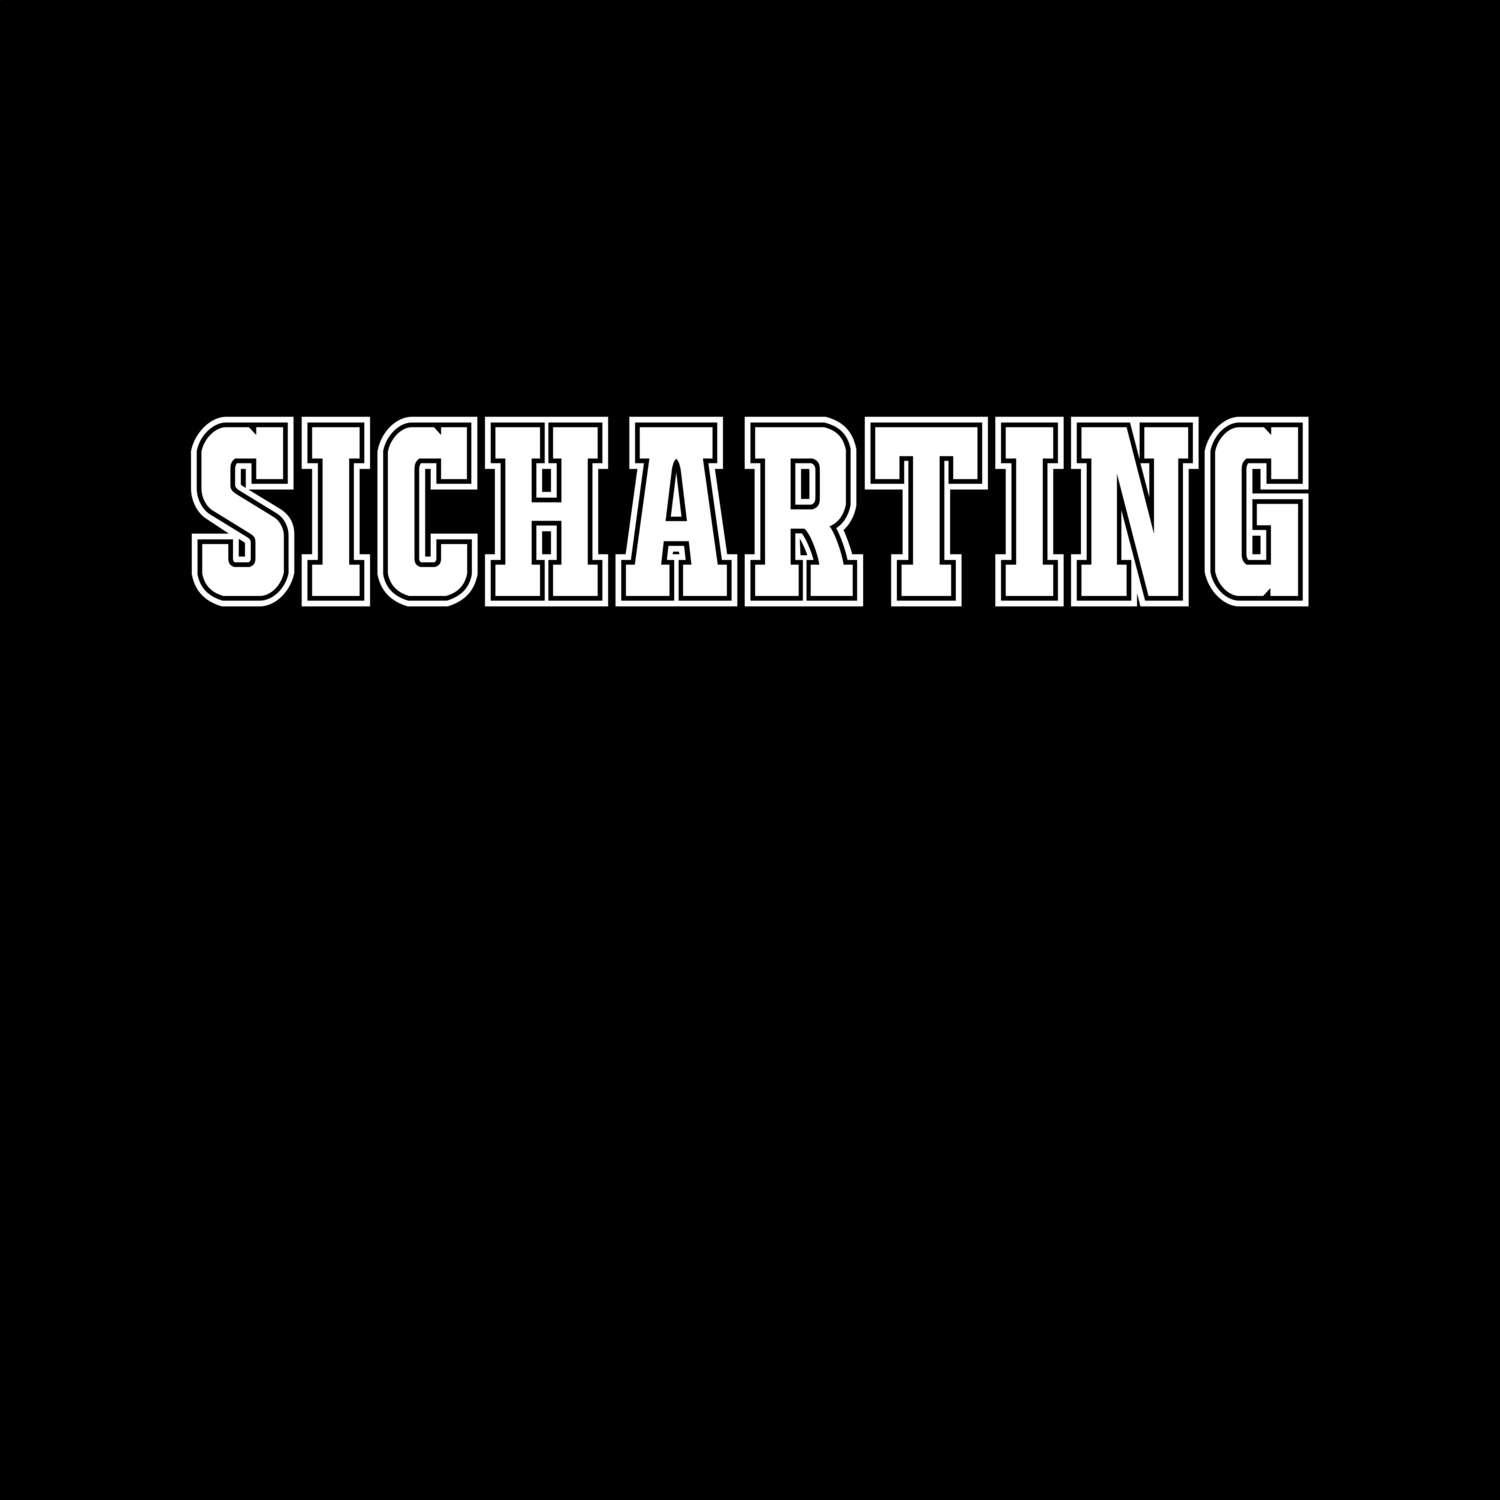 Sicharting T-Shirt »Classic«